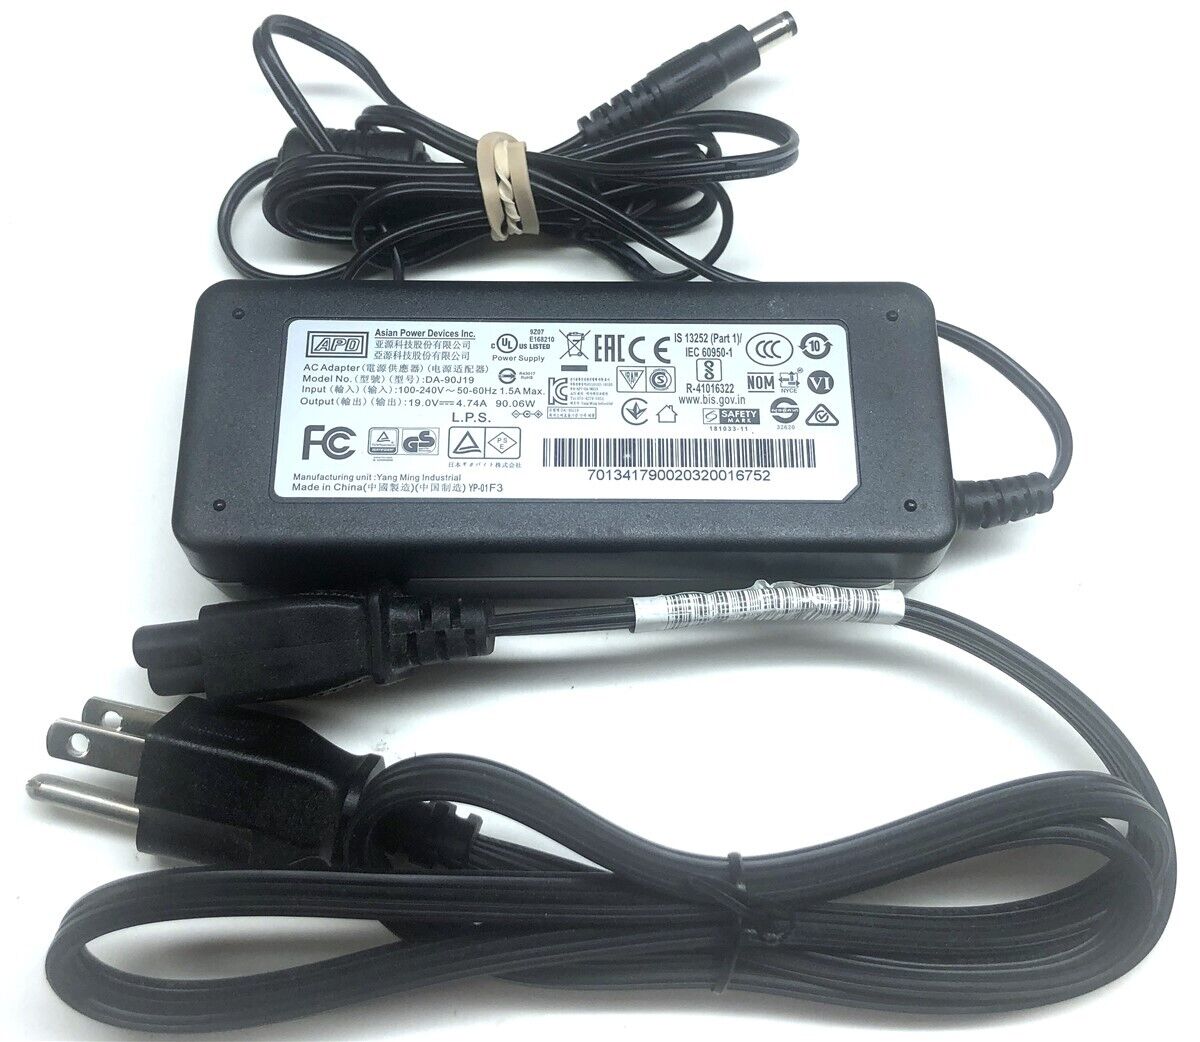 *Brand NEW*Genuine APD Laptop MSI Monitor 19V 4.74A 90W AC Adapter DA-90J19 Power Supply